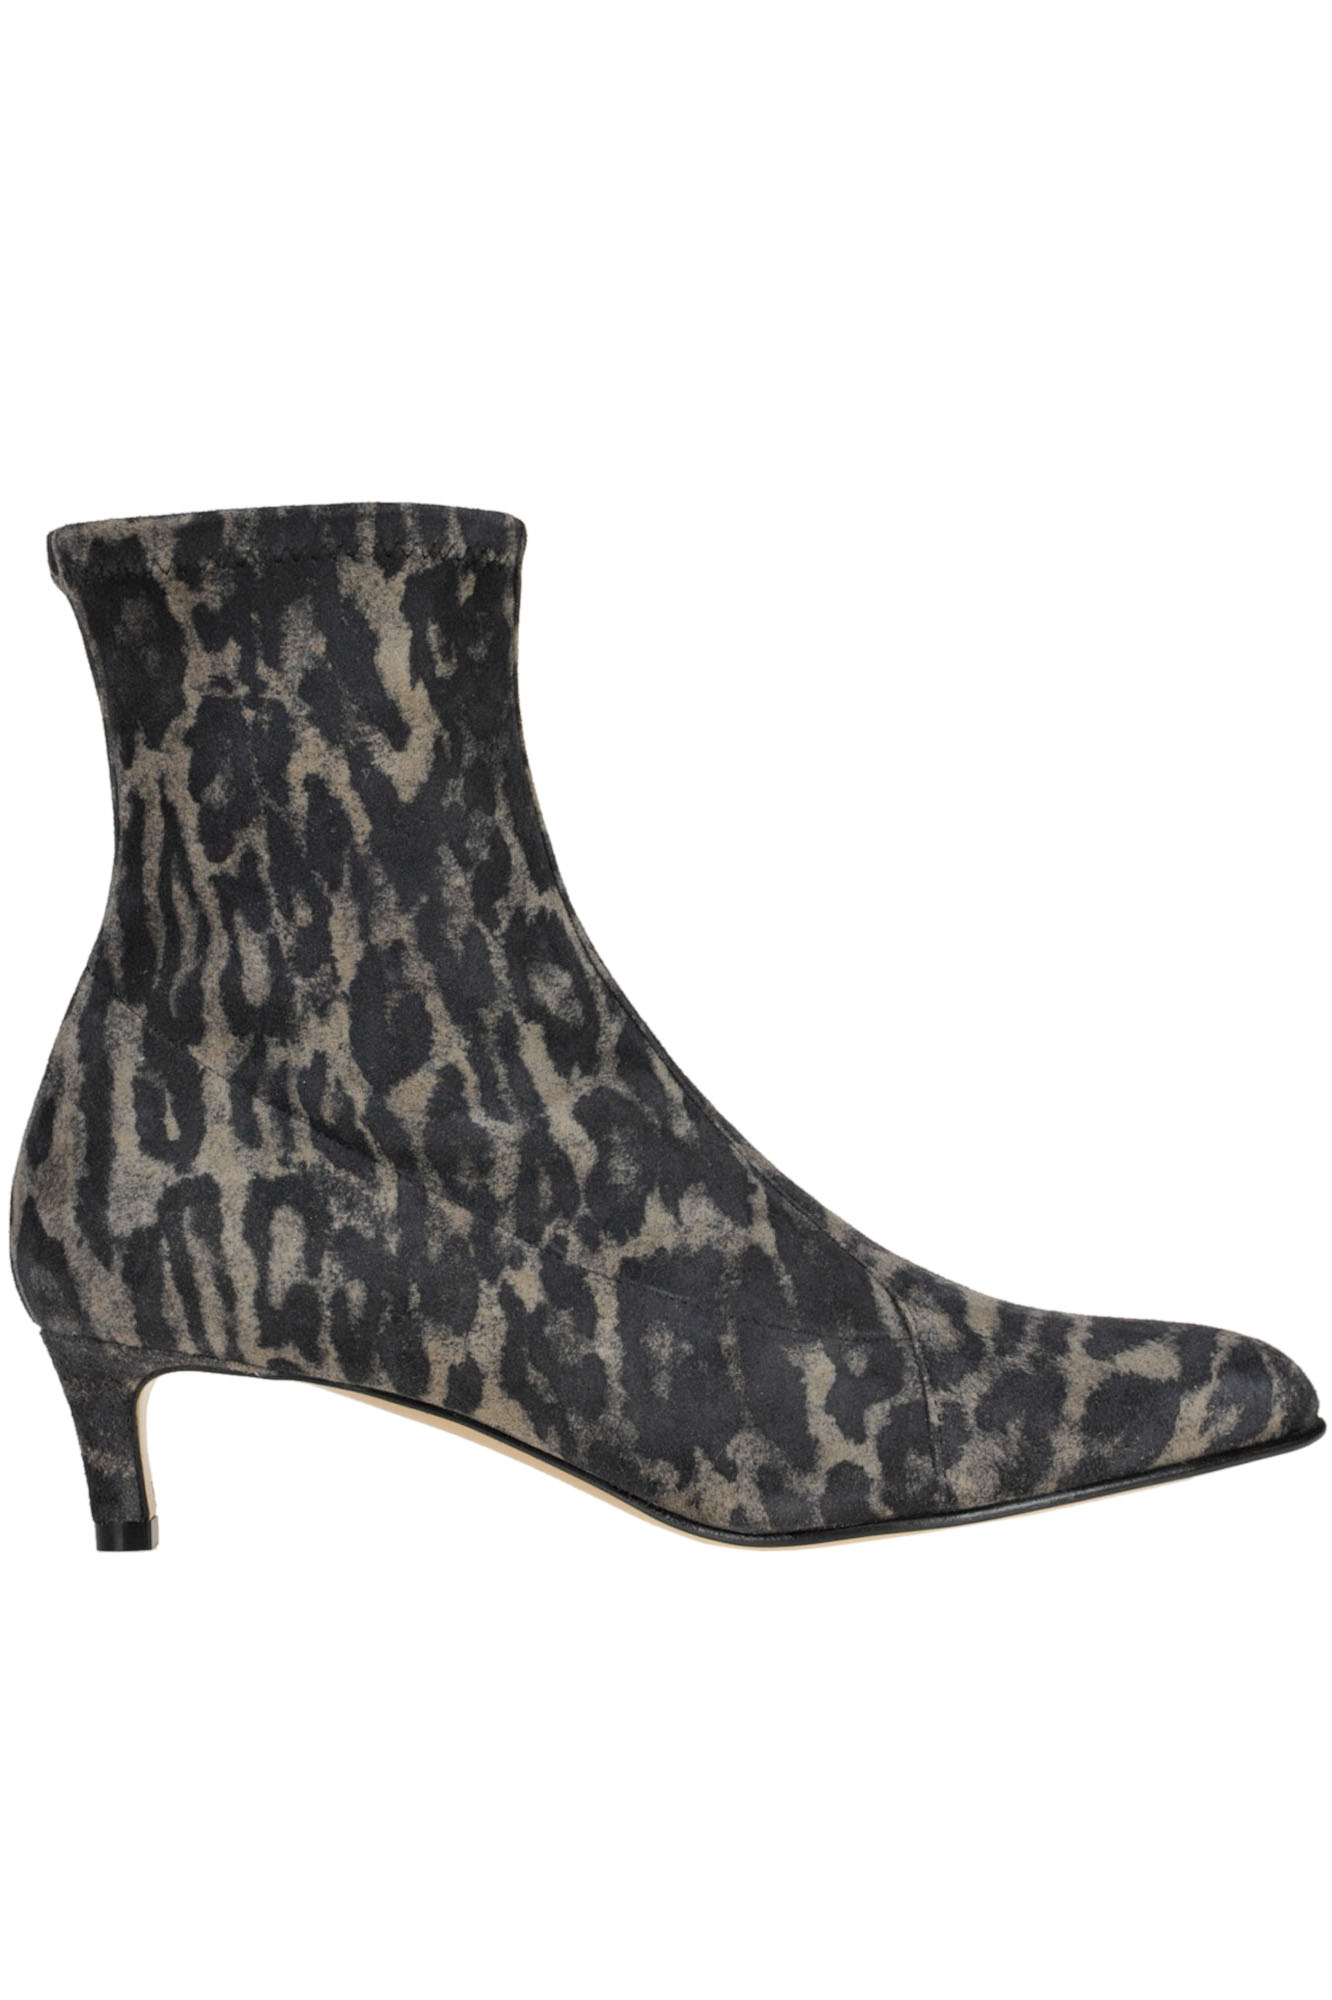 Antonio Barbato Animal Print Ankle-boots In Charcoal